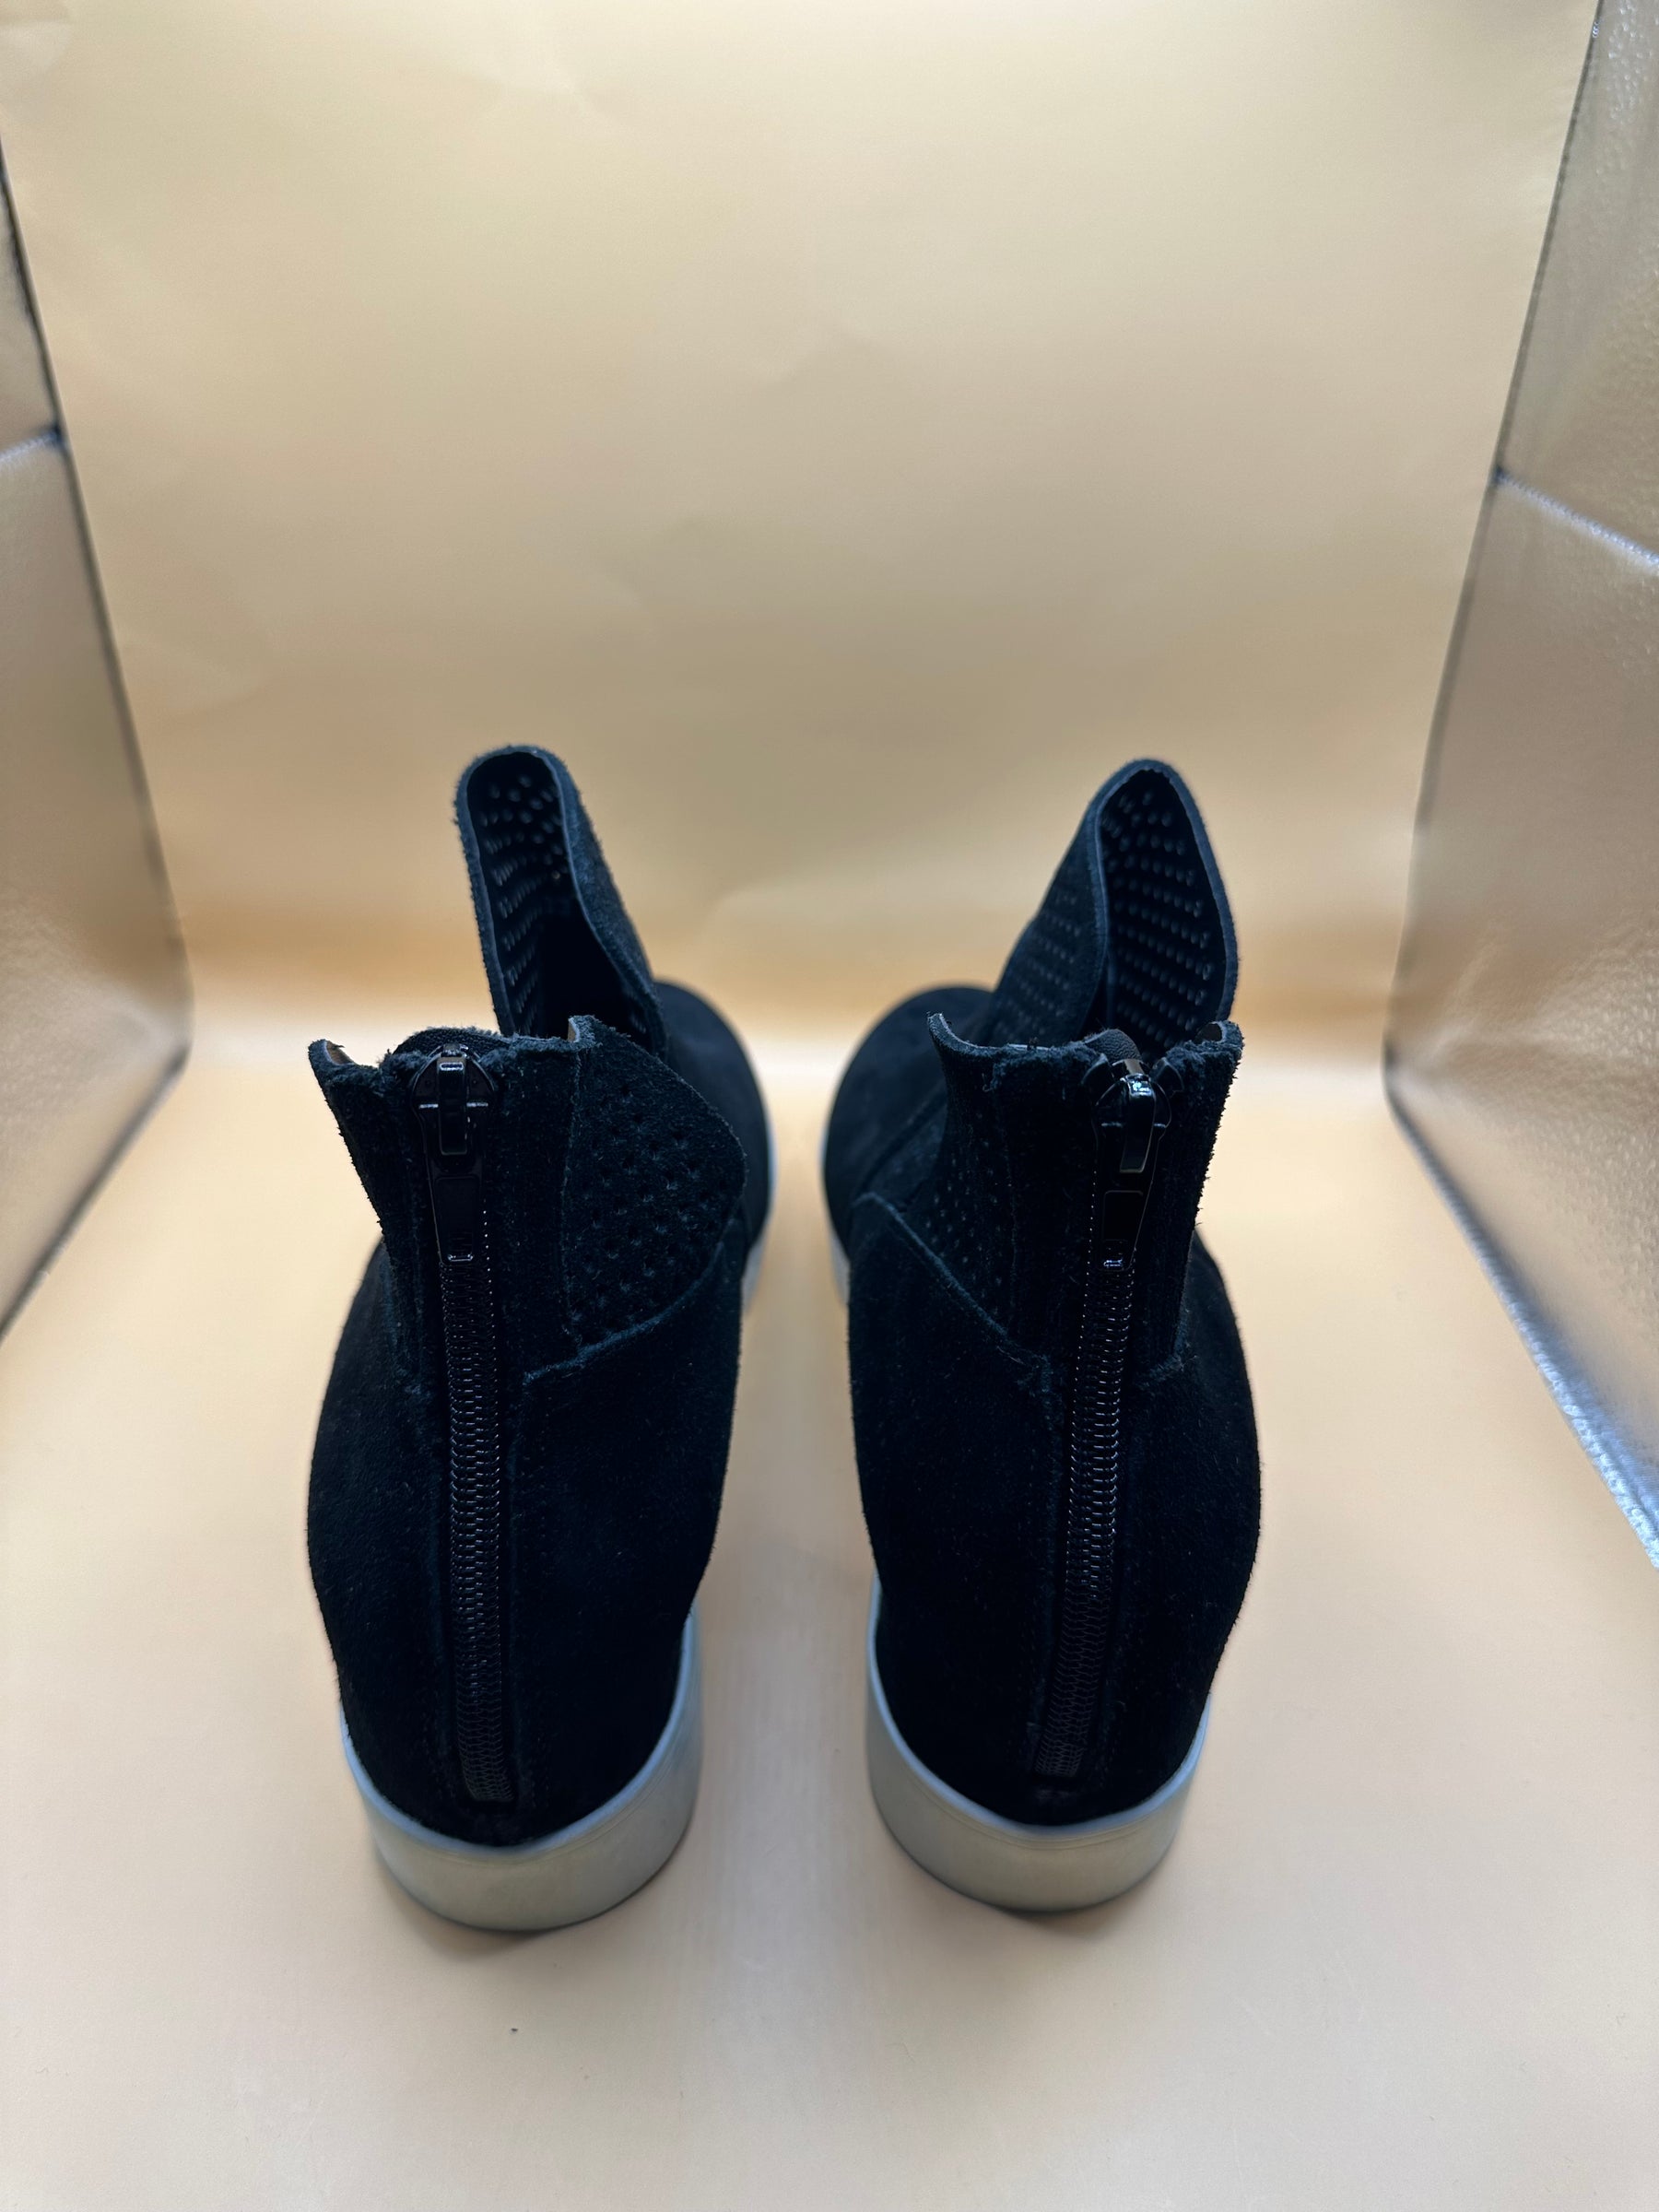 Steve Madden Winnie Platform Black Suede Sneaker Ankle Boots